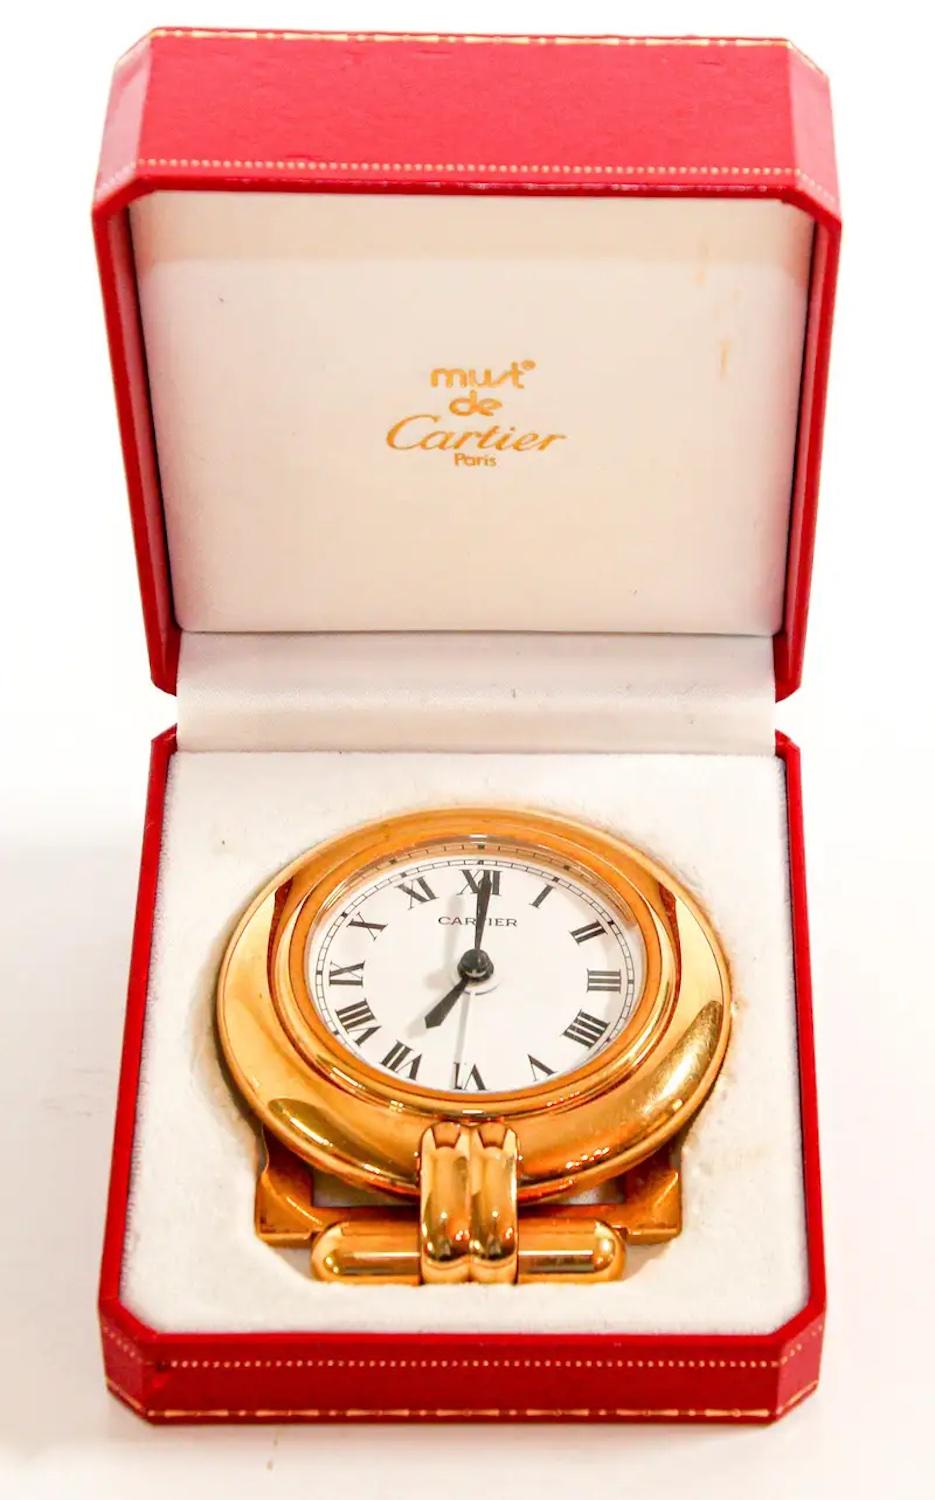 Cartier Colisee Art Deco Travel Desk Clock 24-Karat Gold-Plated 11